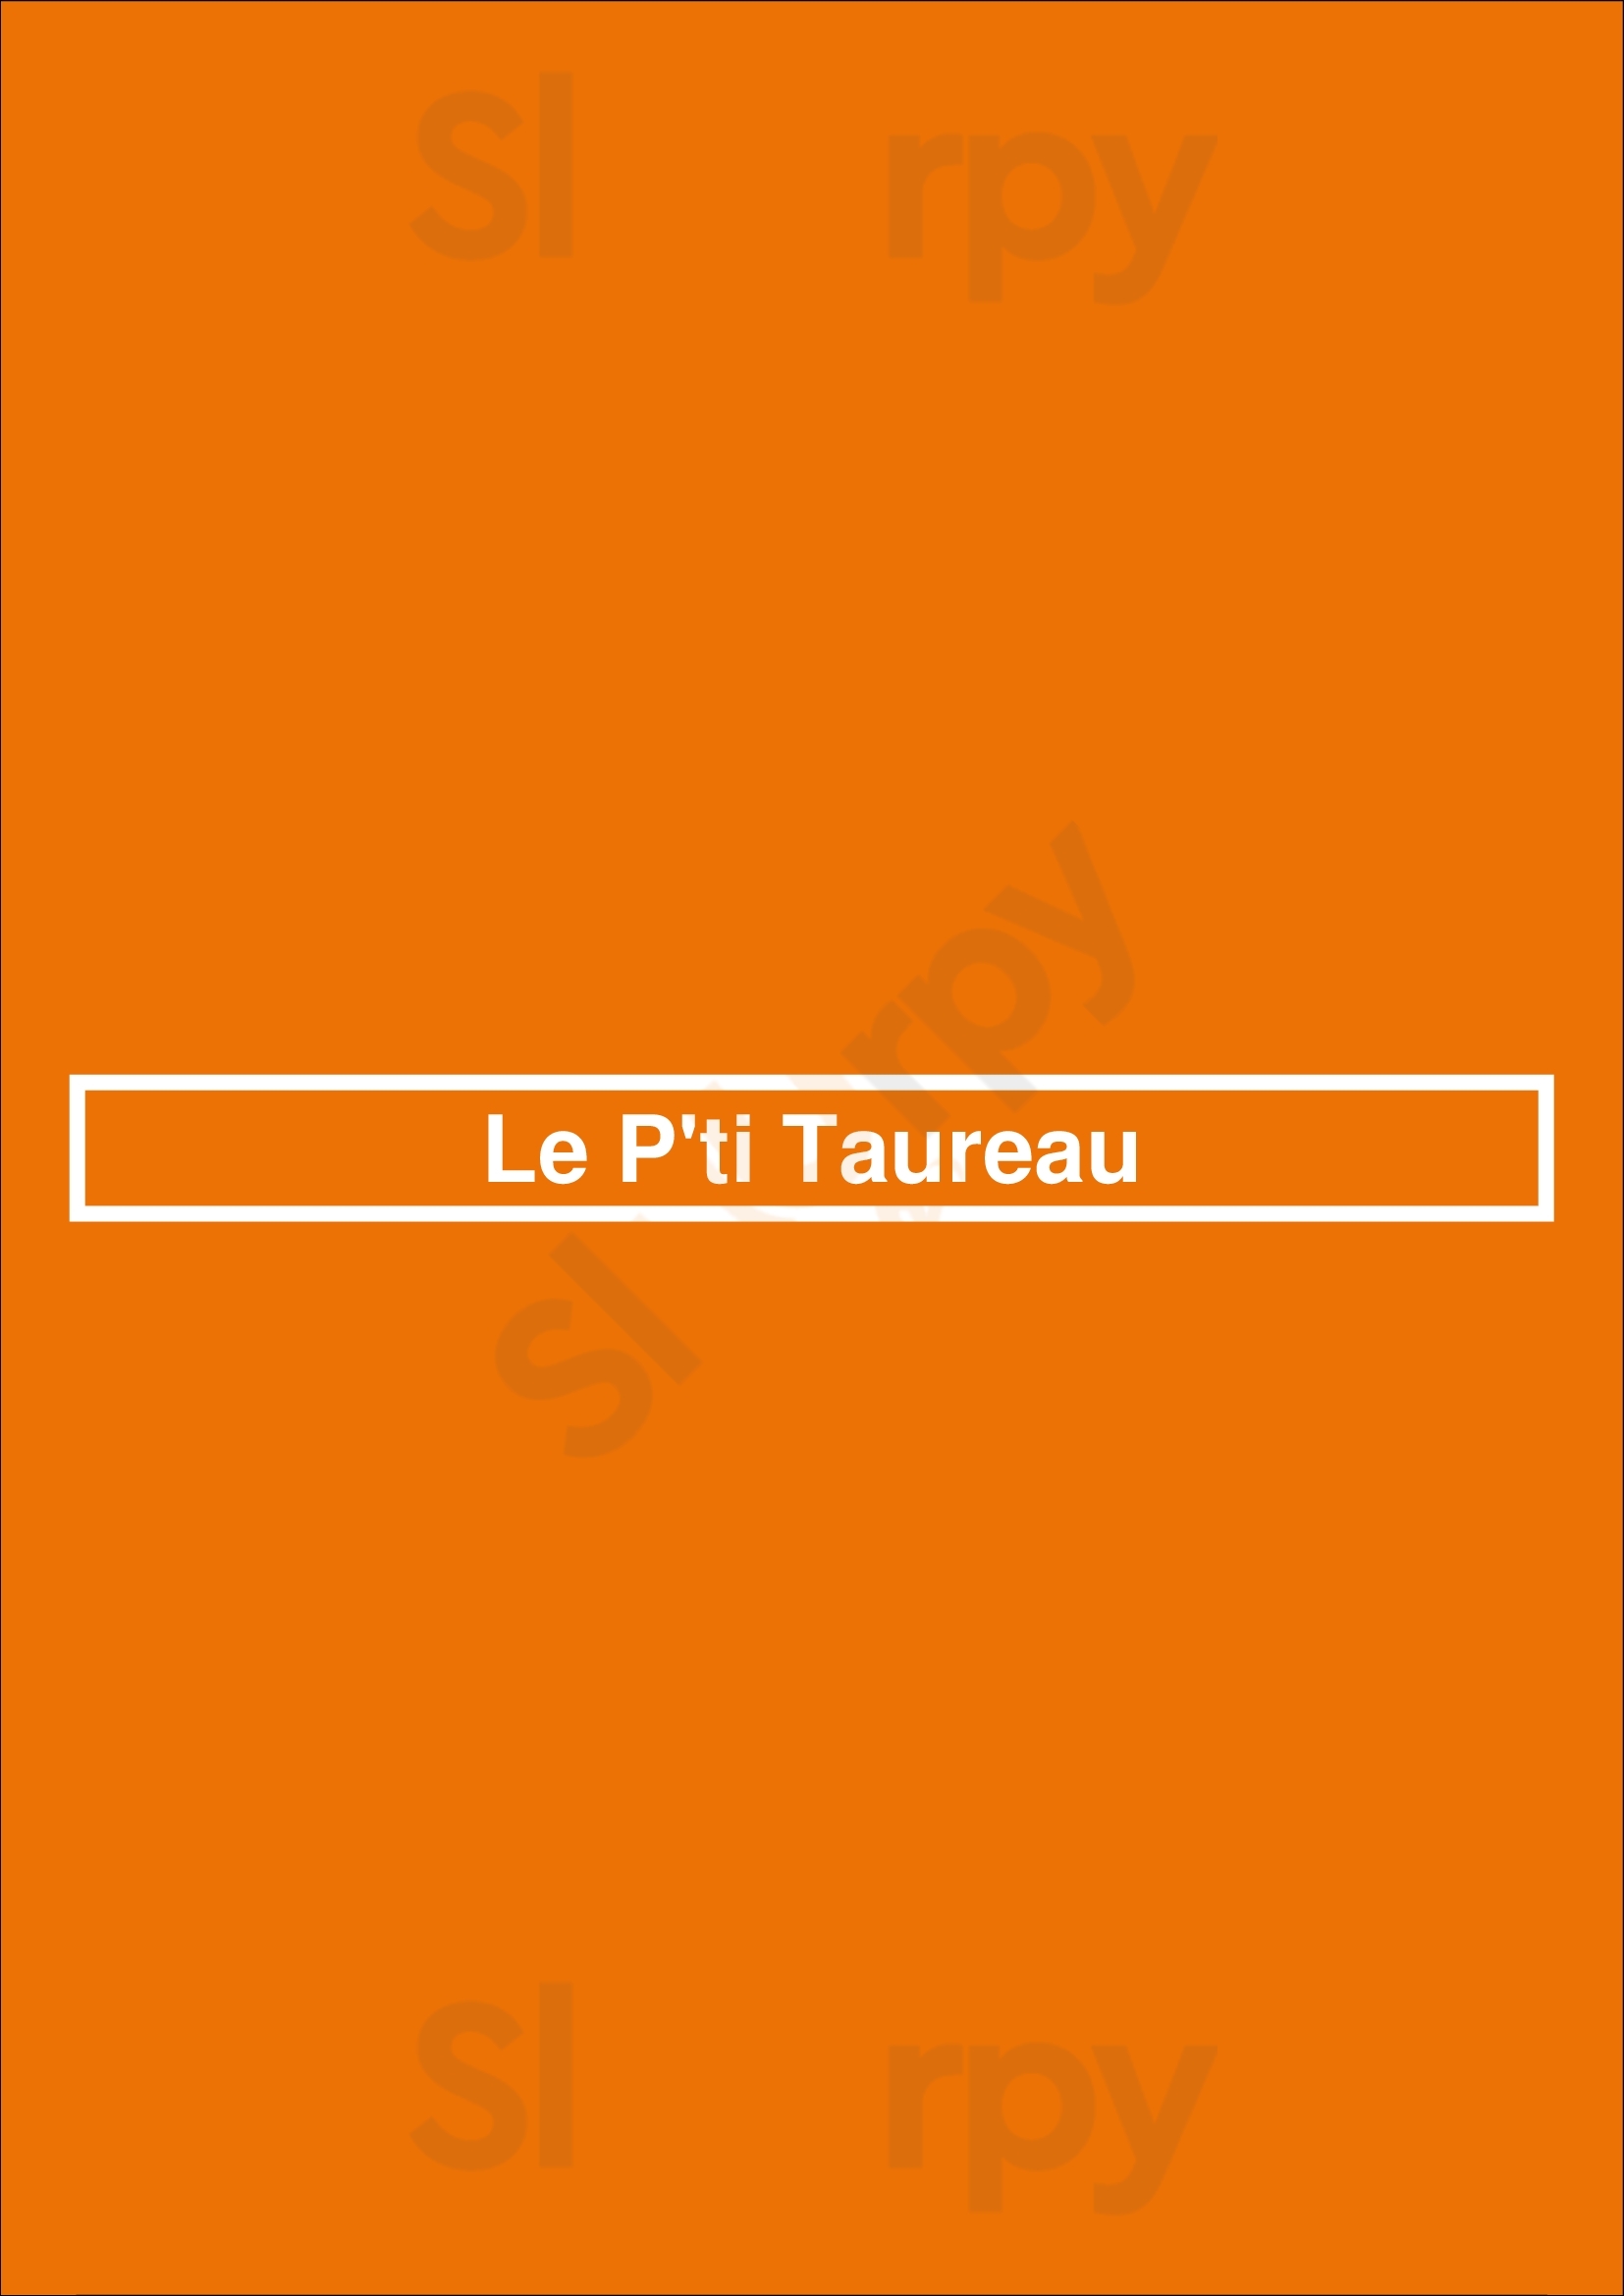 Le P'ti Taureau Montpellier Menu - 1